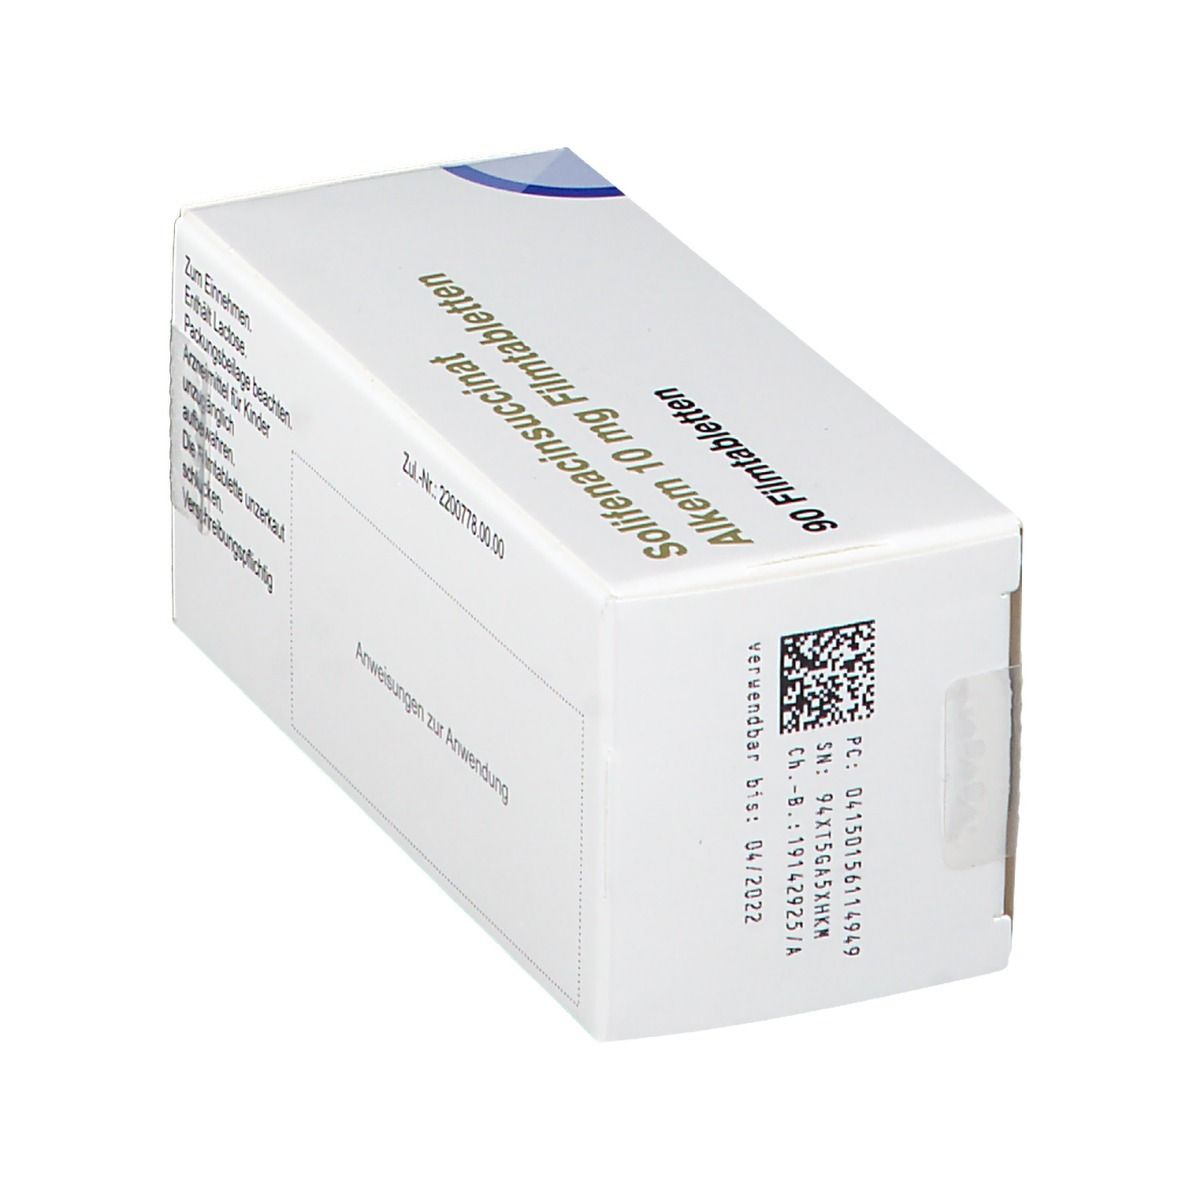 Solifenacinsuccinat Alkem 10 mg